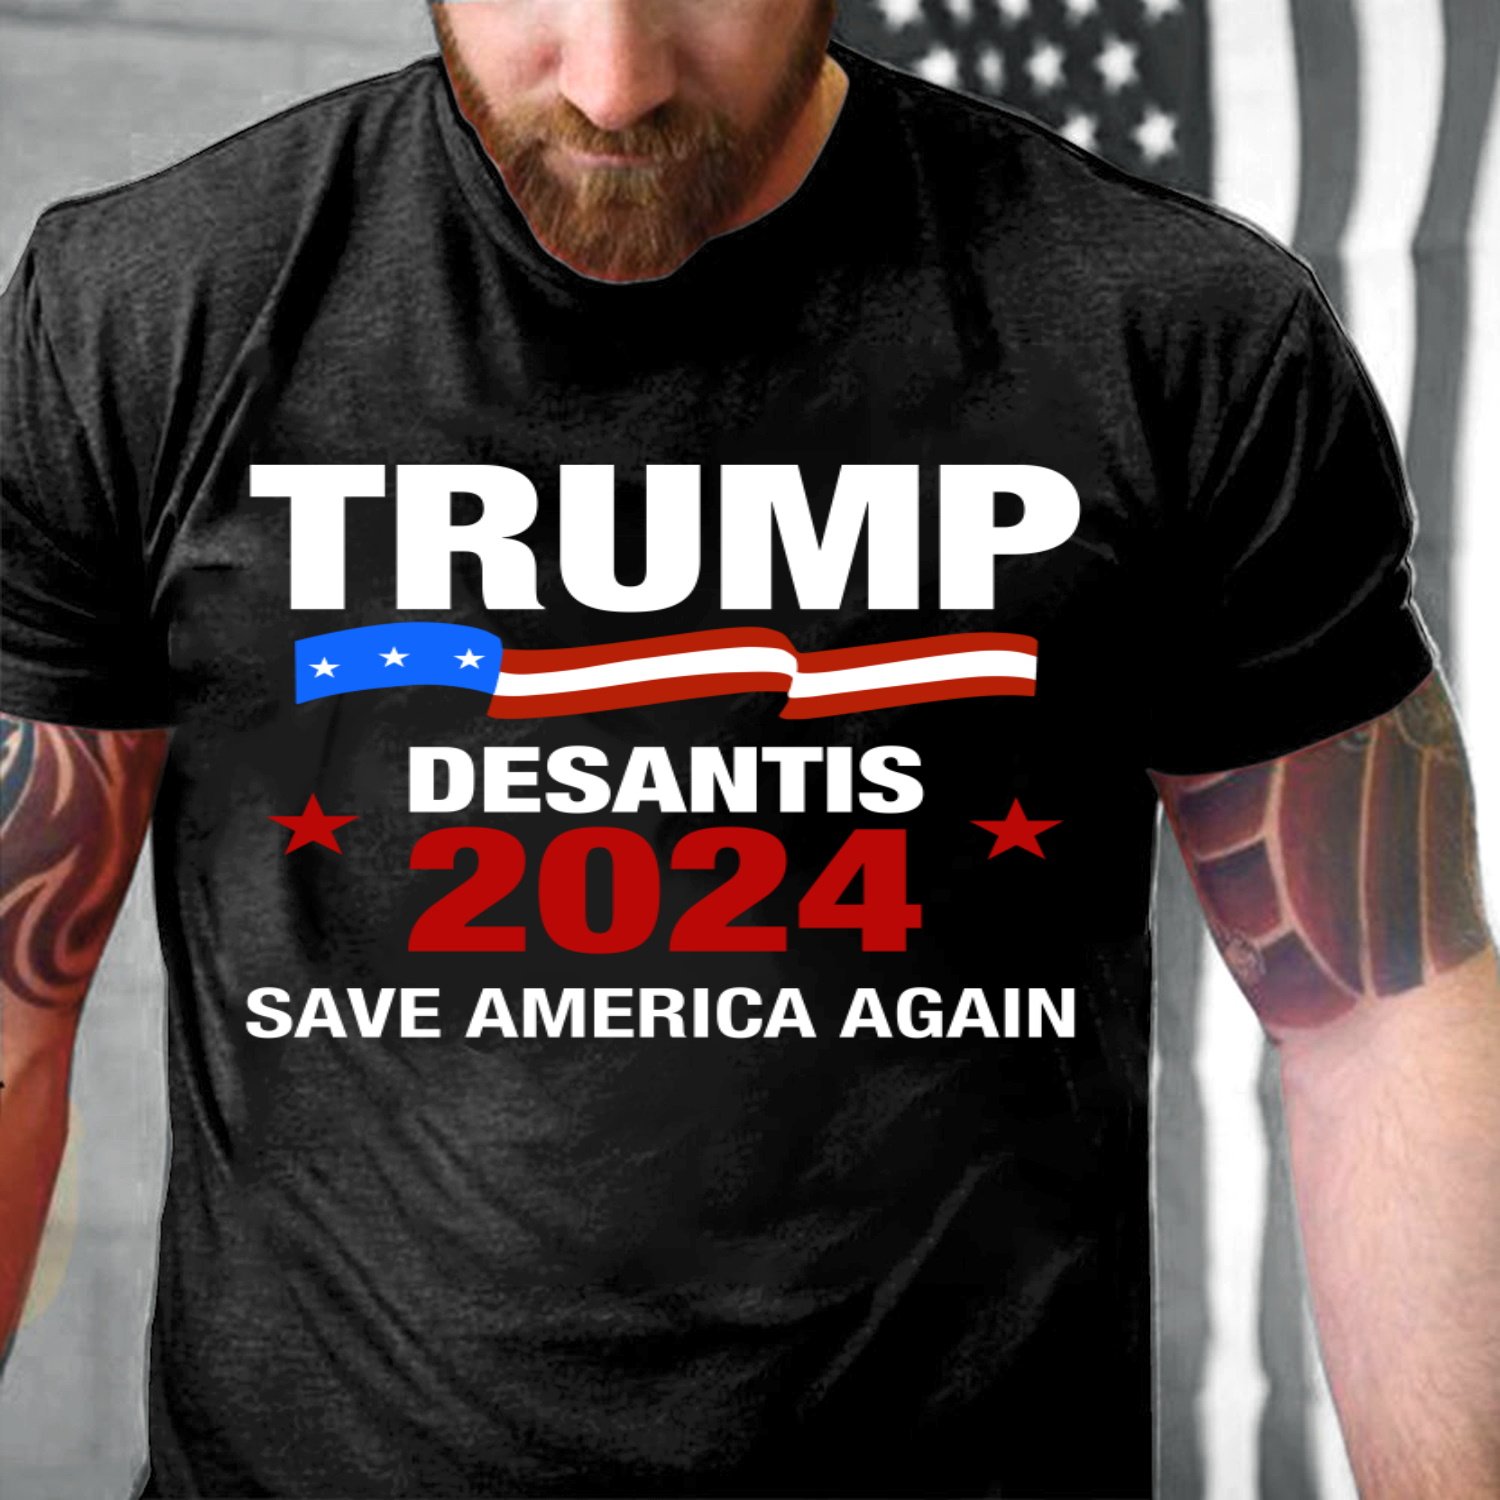 Veteran Shirt, Trump Shirt, Trump Desantis 2024 Save America Again T-Shirt KM0408